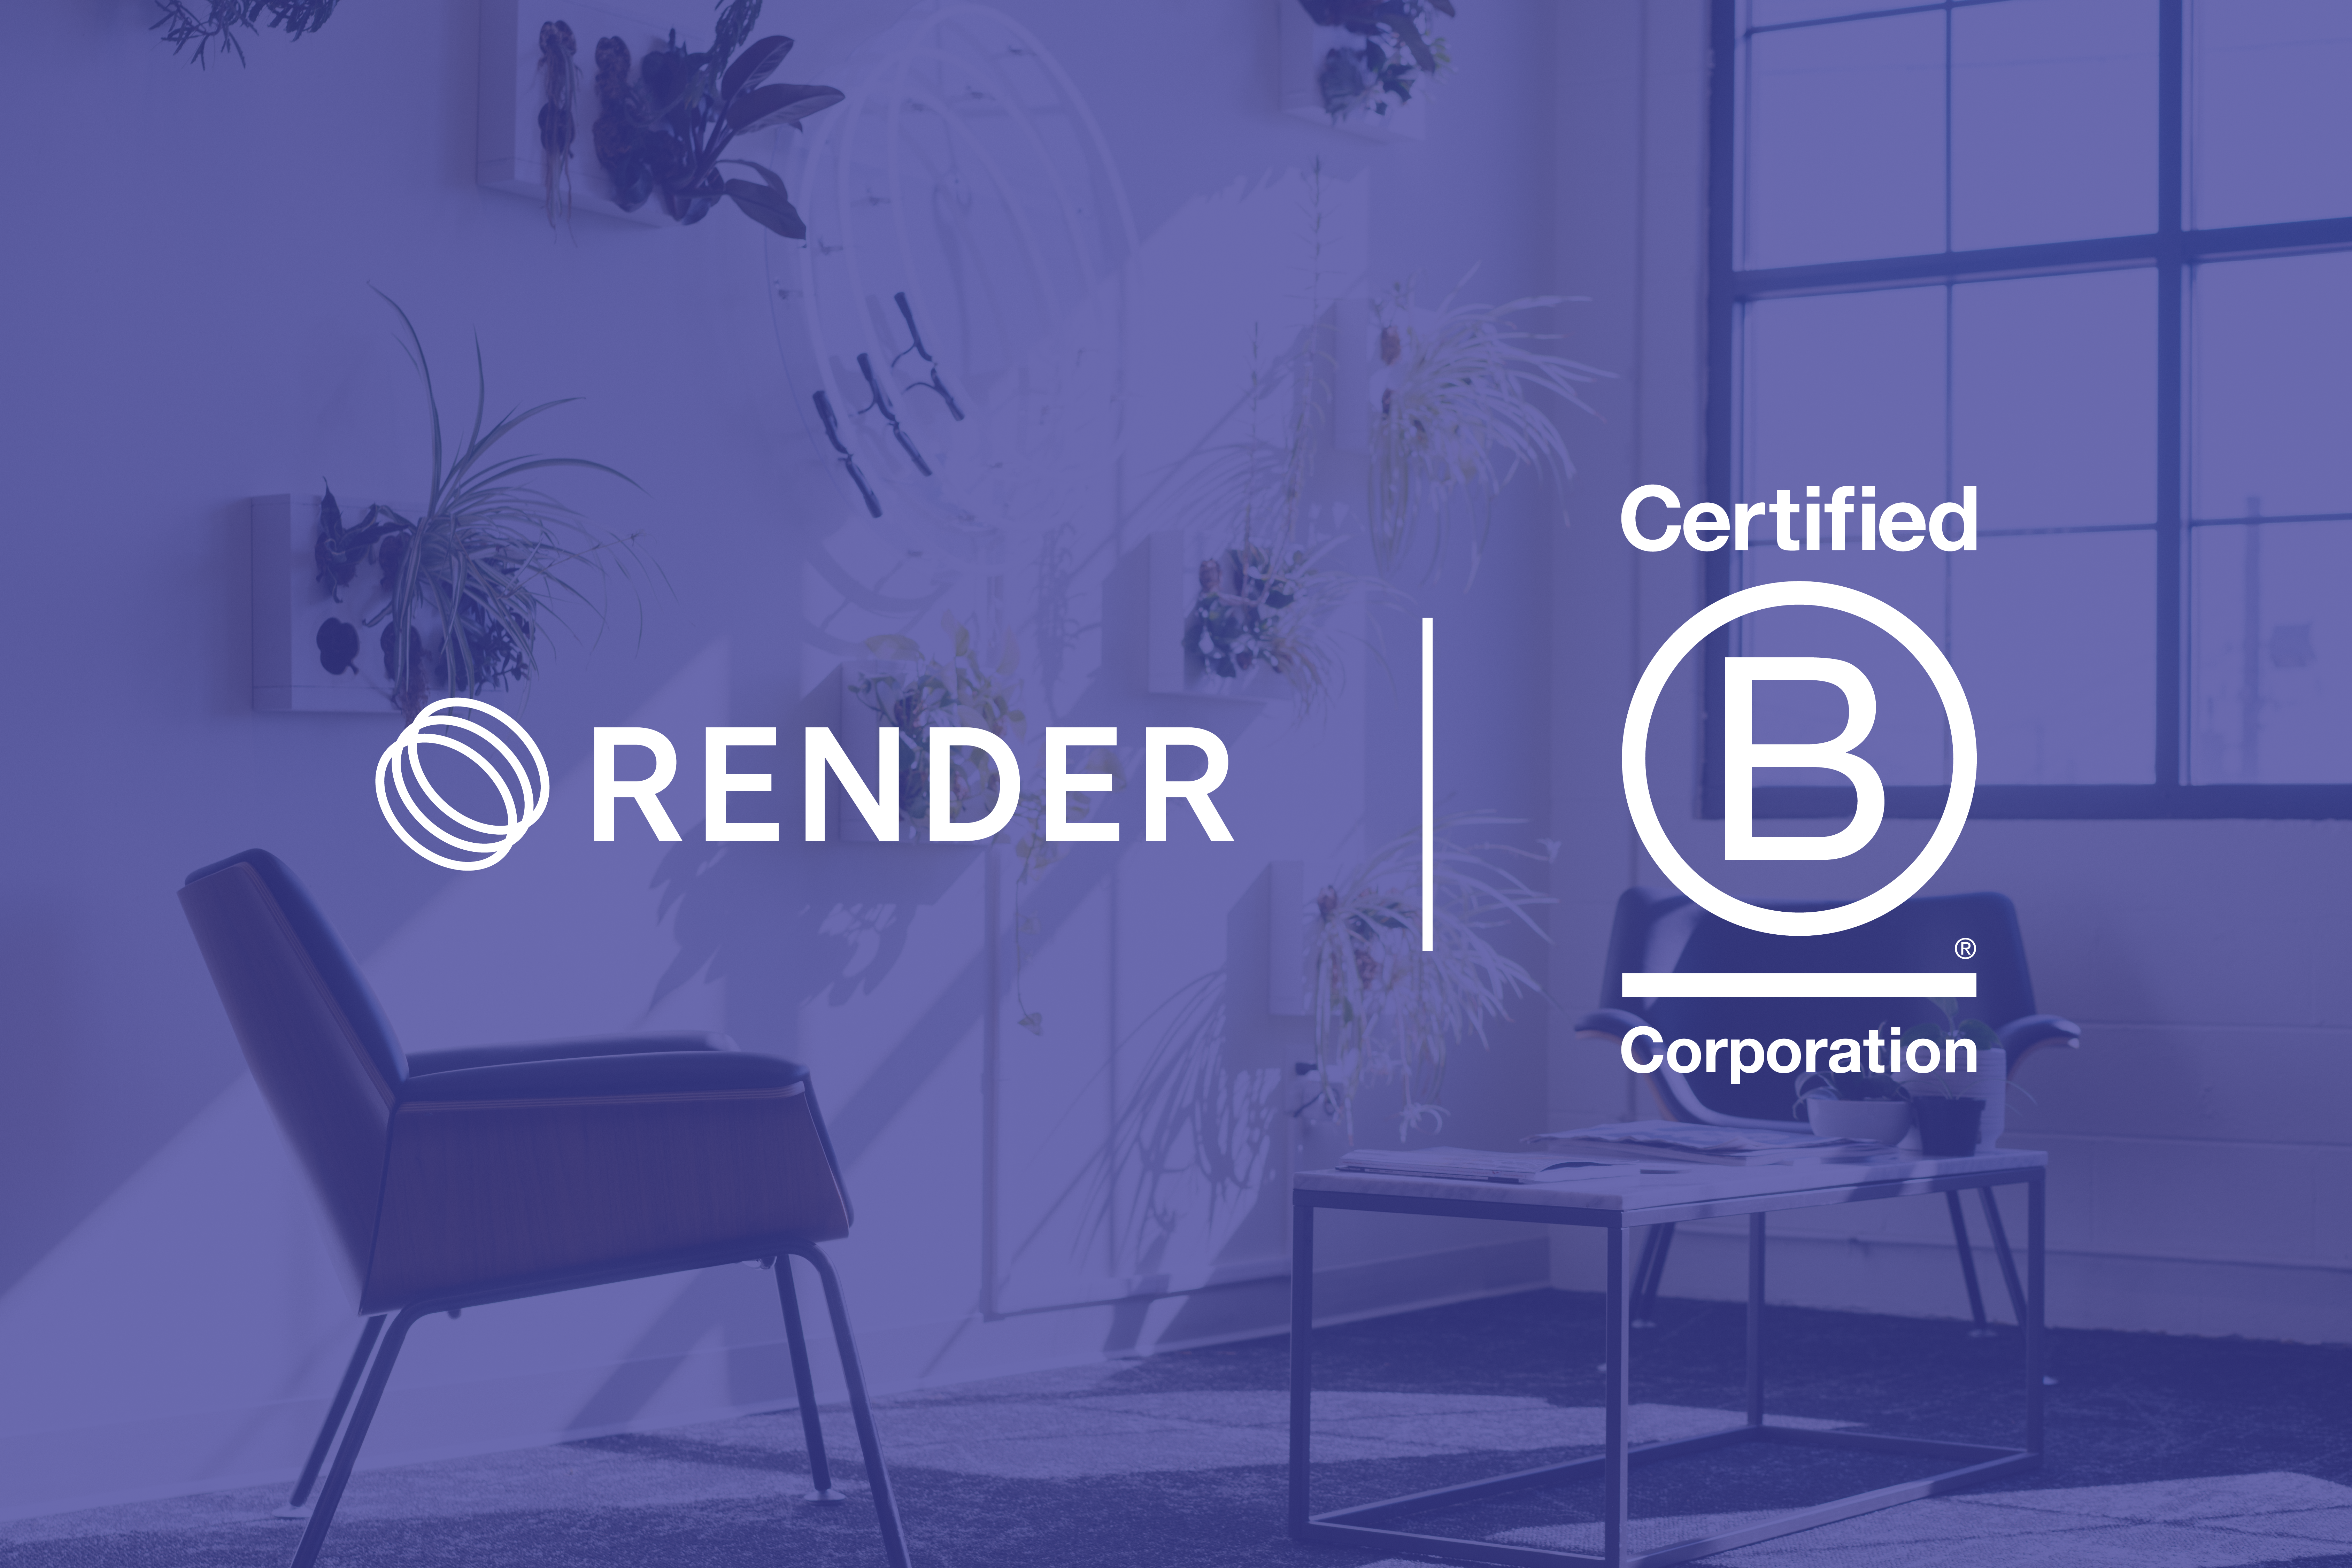 B Corp Certified Marketing Louisville Kentucky Render 